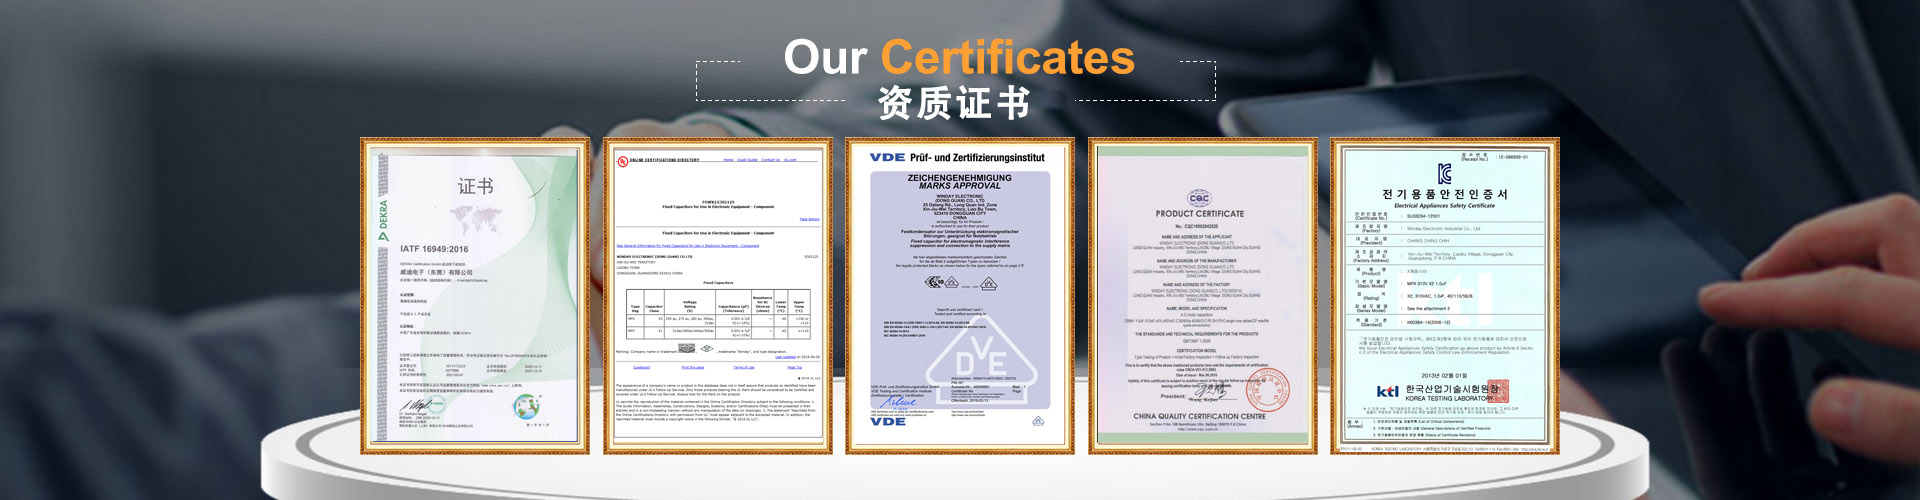 5,Shenzhen Nixi Technology Co., Ltd. Ceramic Capacitors | Varistors | NTC Thermistors | Monolithic Capacitors | Chip Safety Capacitors | Chip Varistors